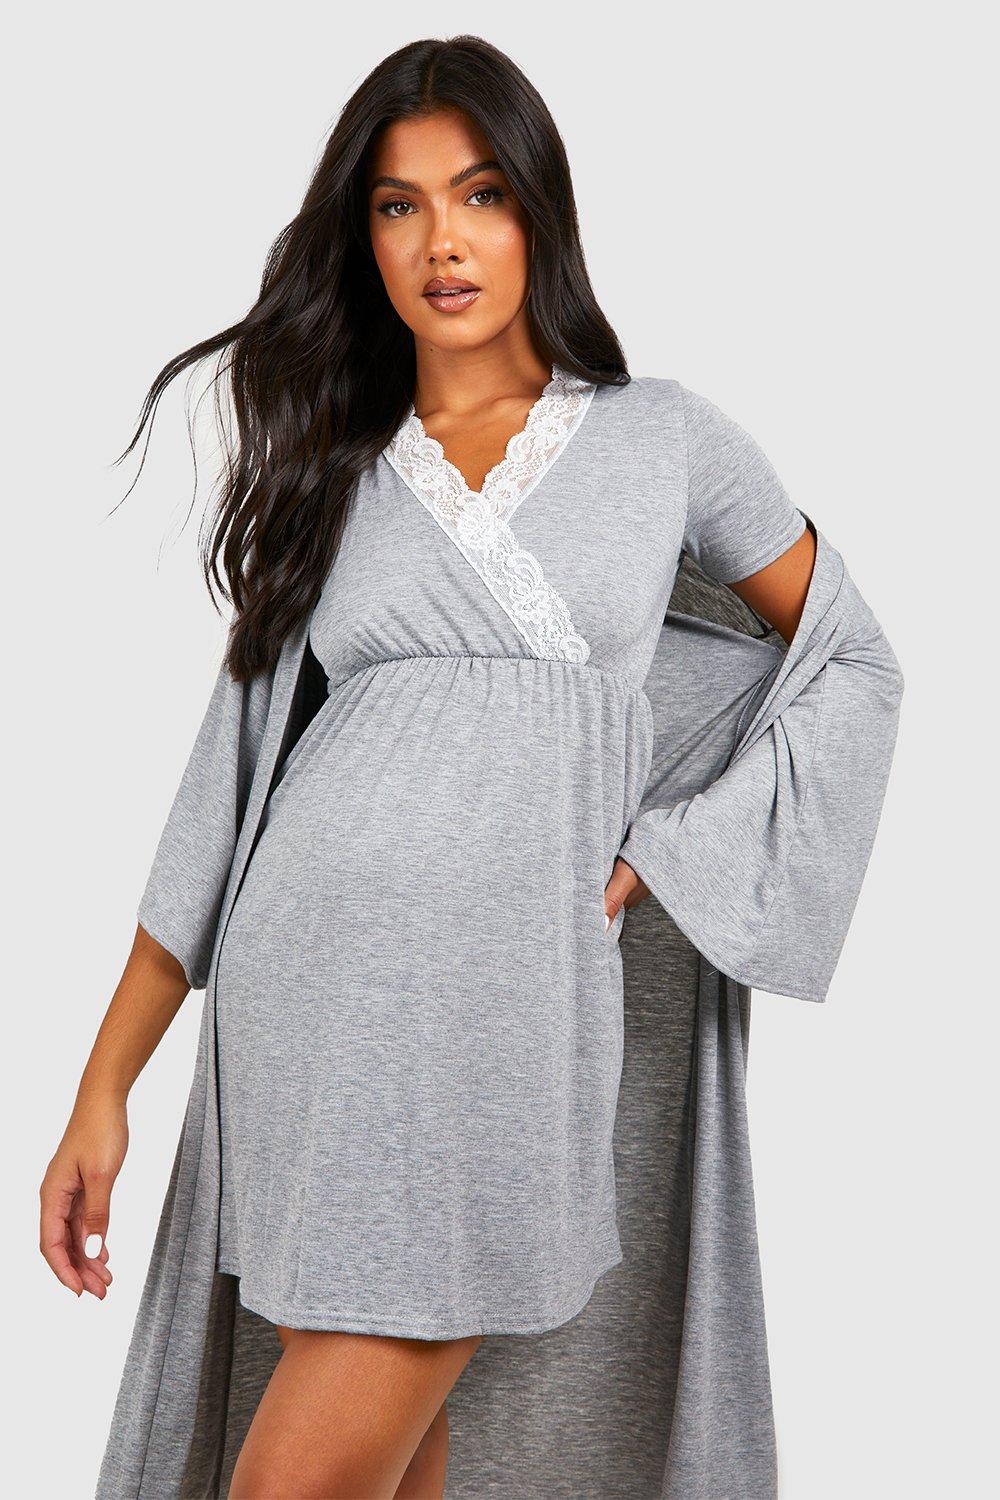 Maternity/Nursing Nightgown